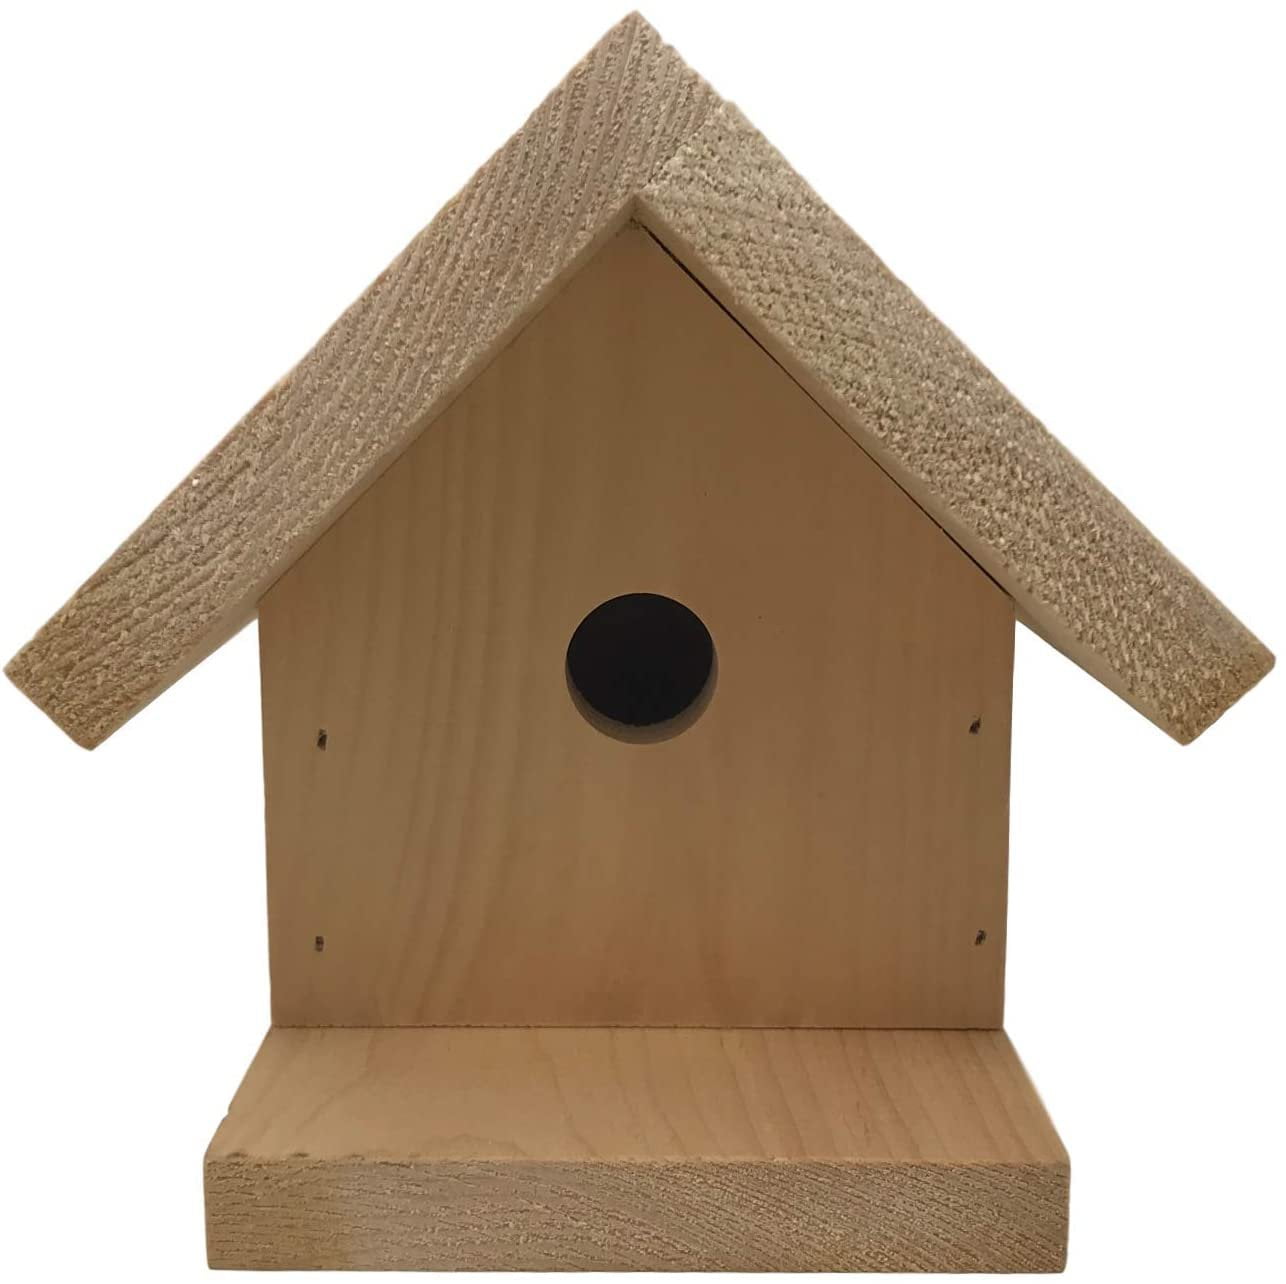 For Alison Small Gazebo Bird house Amish Handcrafted Handmade  Wood 